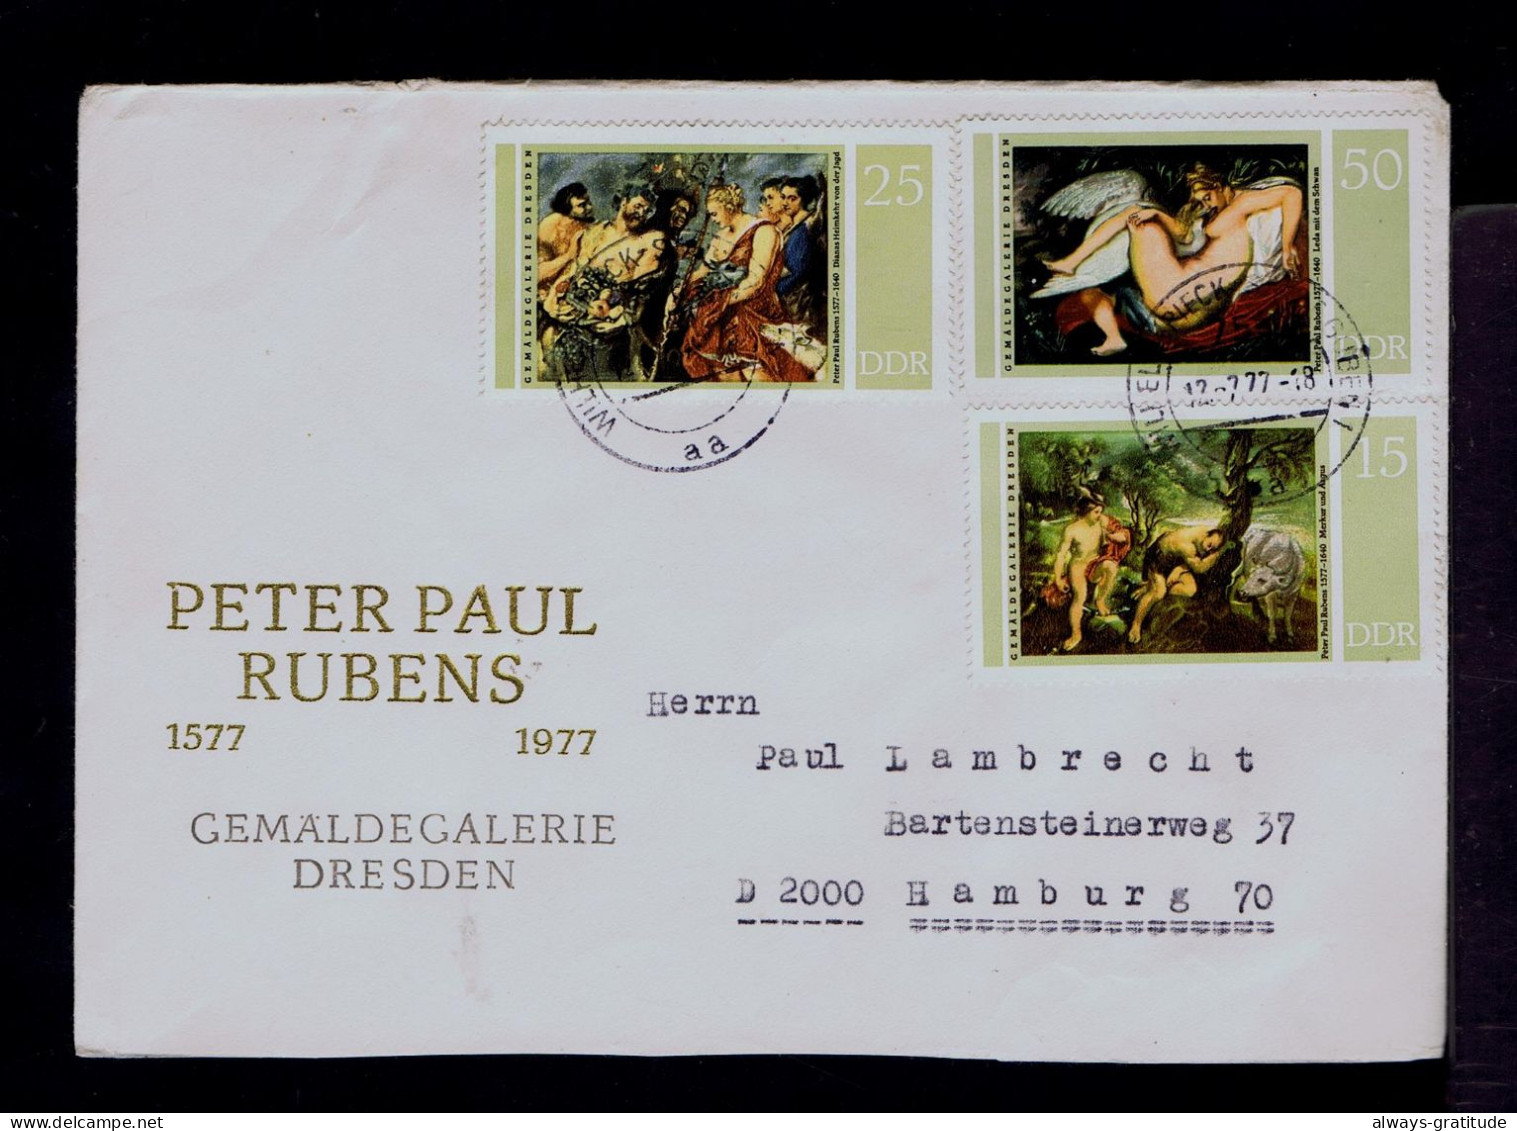 Sp10386 DDR "Gemalde Galerie -DRESDEN" Museum RUBENS 1577-1640 Peinture Arts Paintings Mailed Hamburg - Rubens